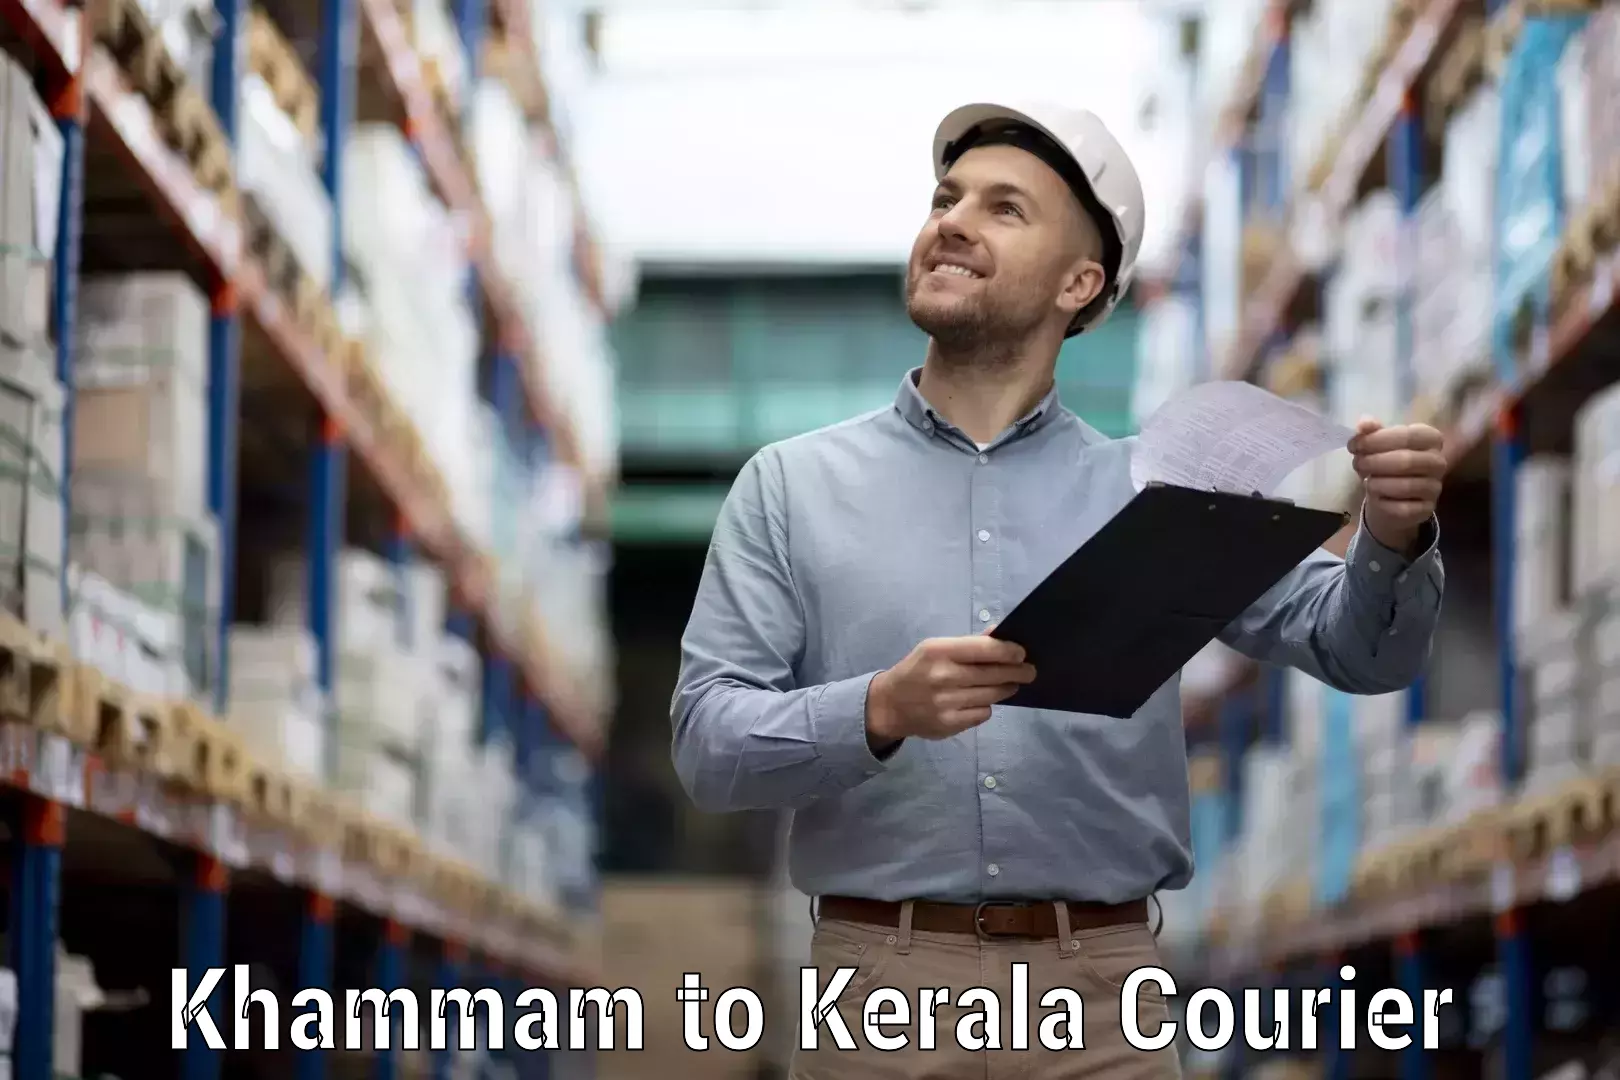 Digital courier platforms Khammam to Mundakayam